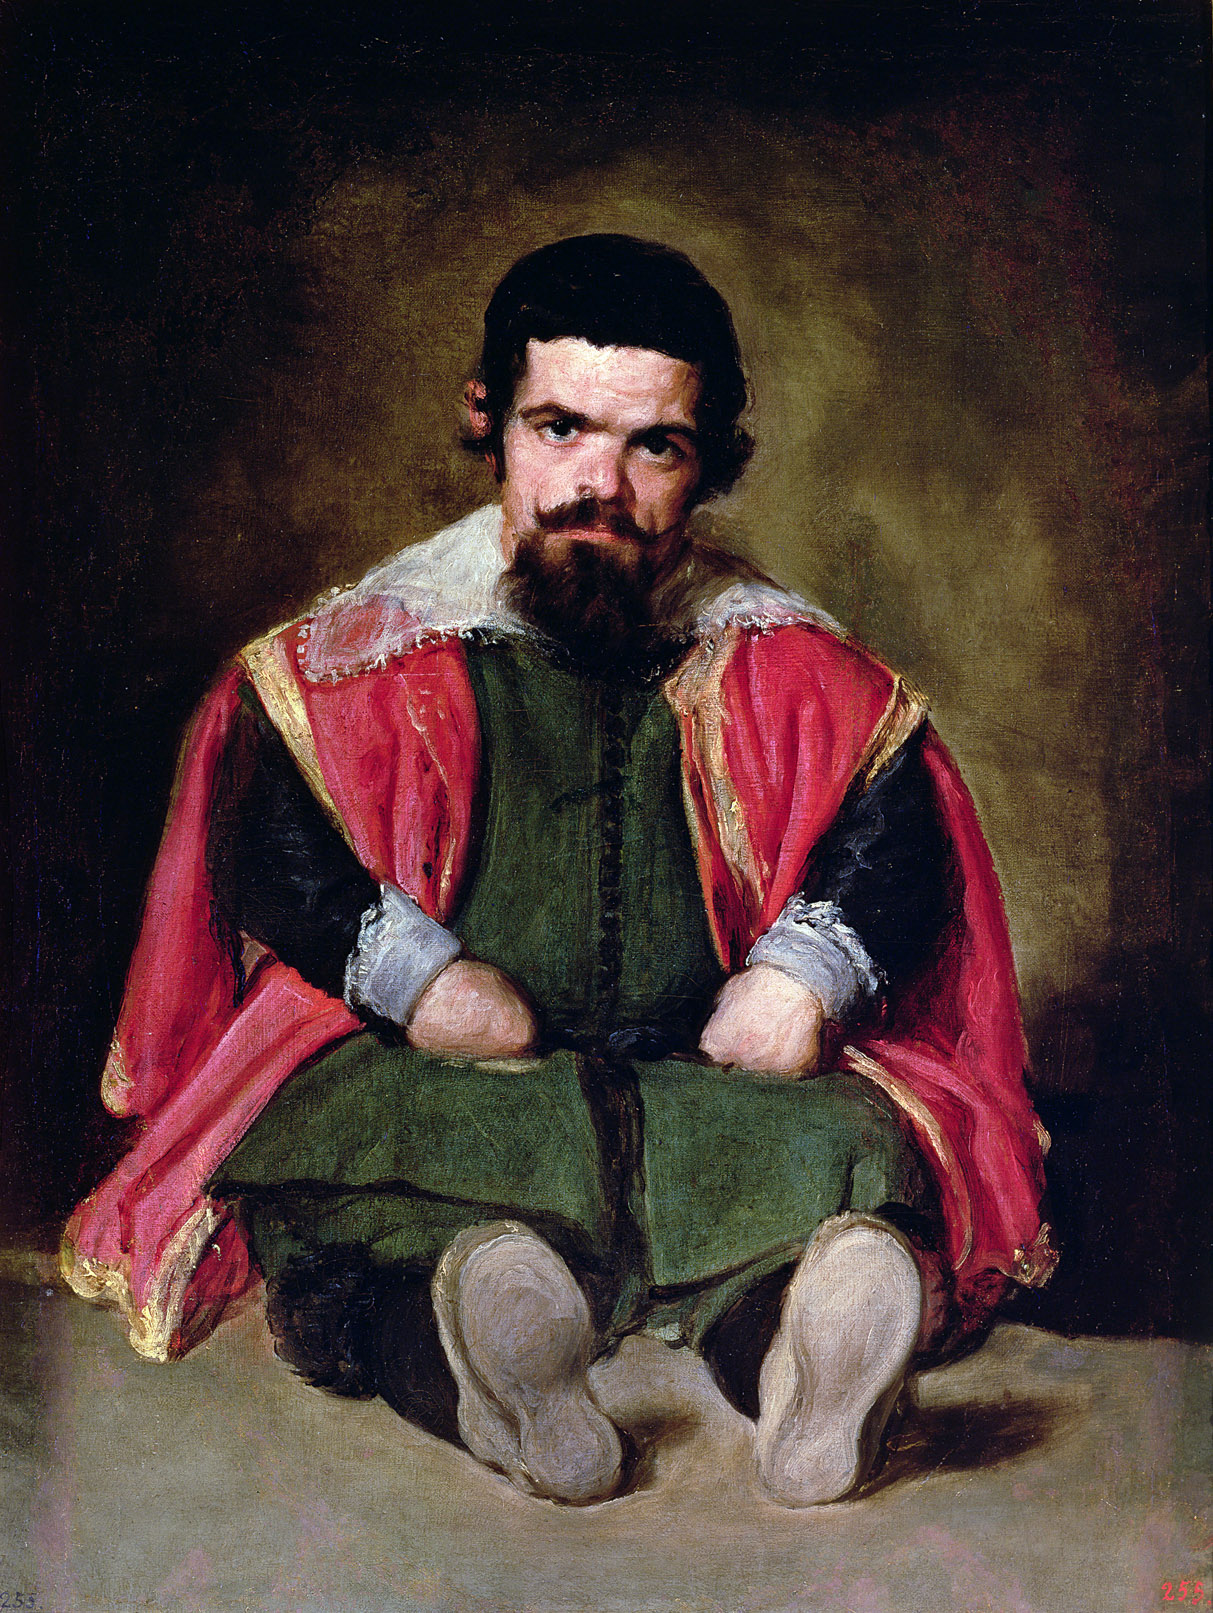 The Buffoon Sebastian de Morra, by Diego Rodriguez de Silva y Velazquez, c. 1646. 